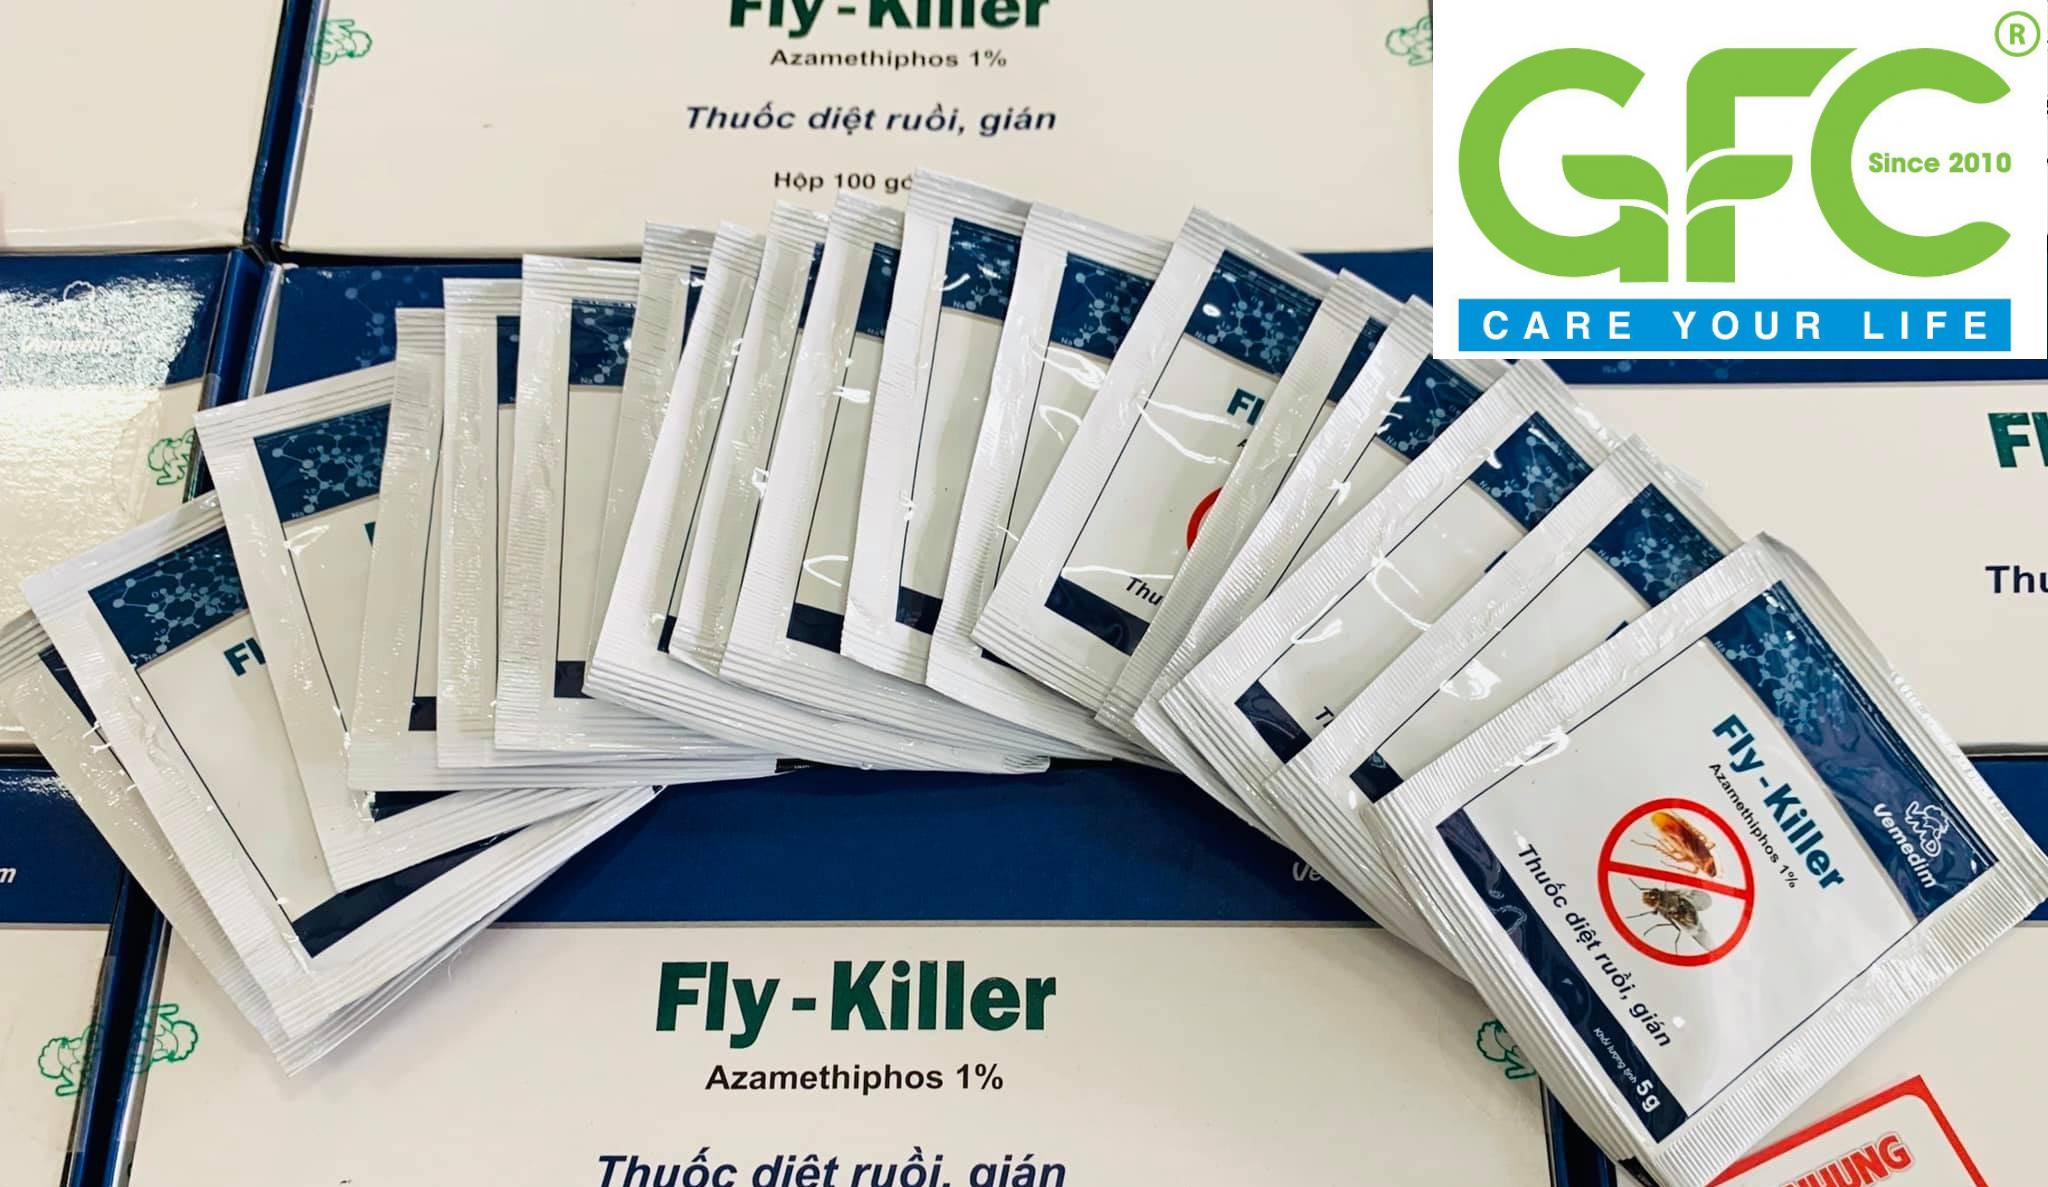 Fly – Killer gói 5g